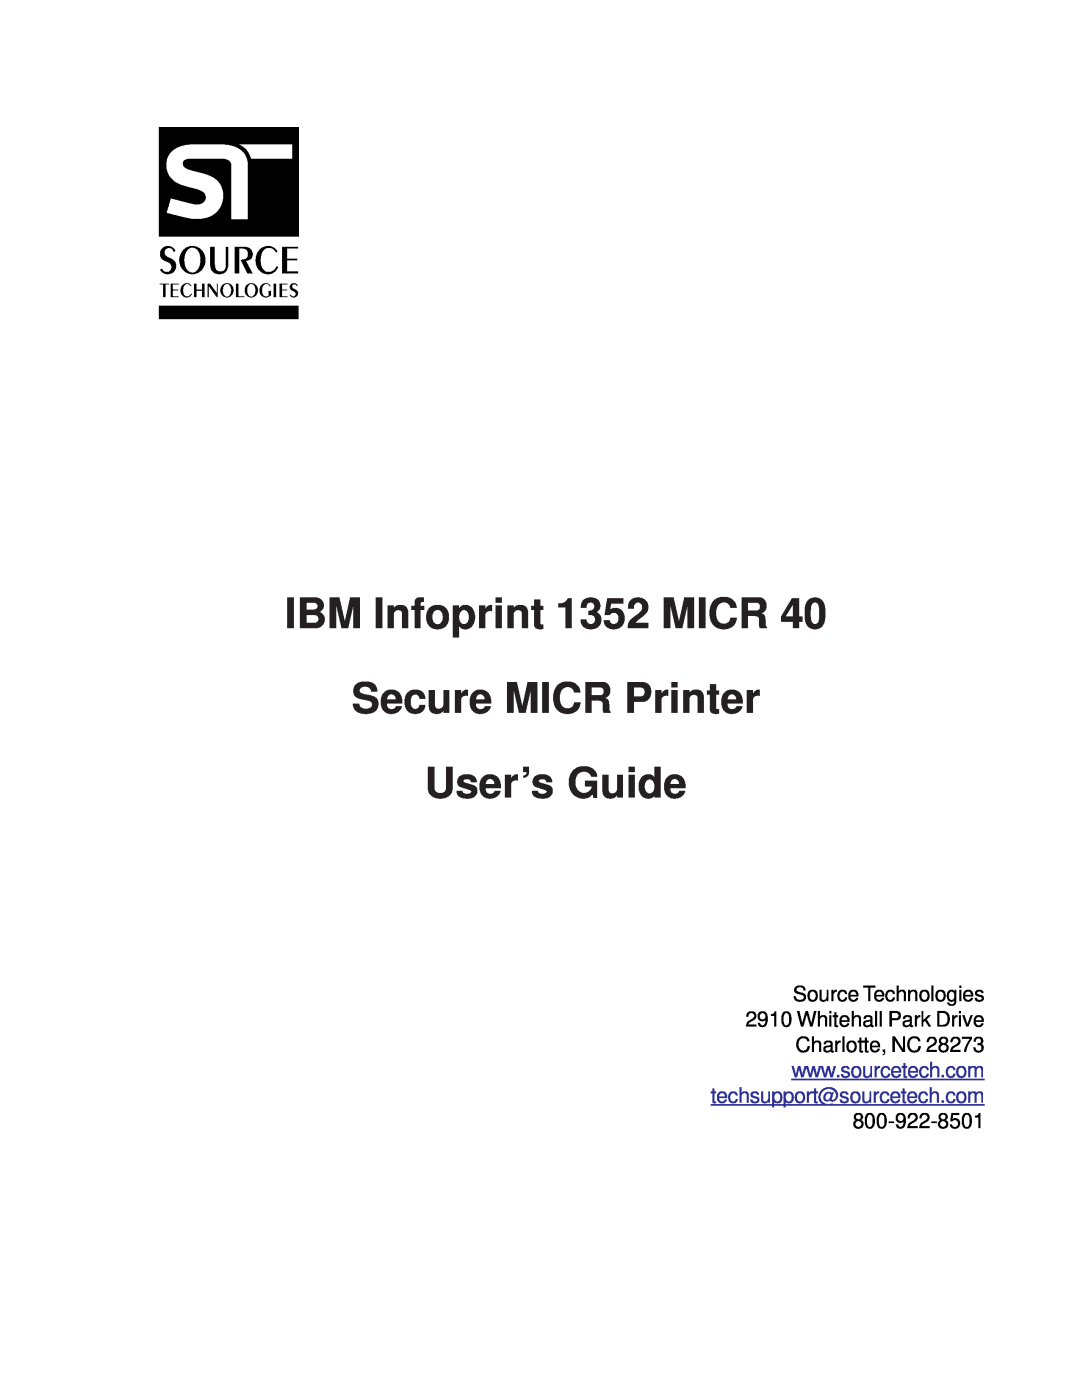 Source Technologies 1352 MICR 40 manual IBM Infoprint 1352 MICR Secure MICR Printer User’s Guide, Source Technologies 